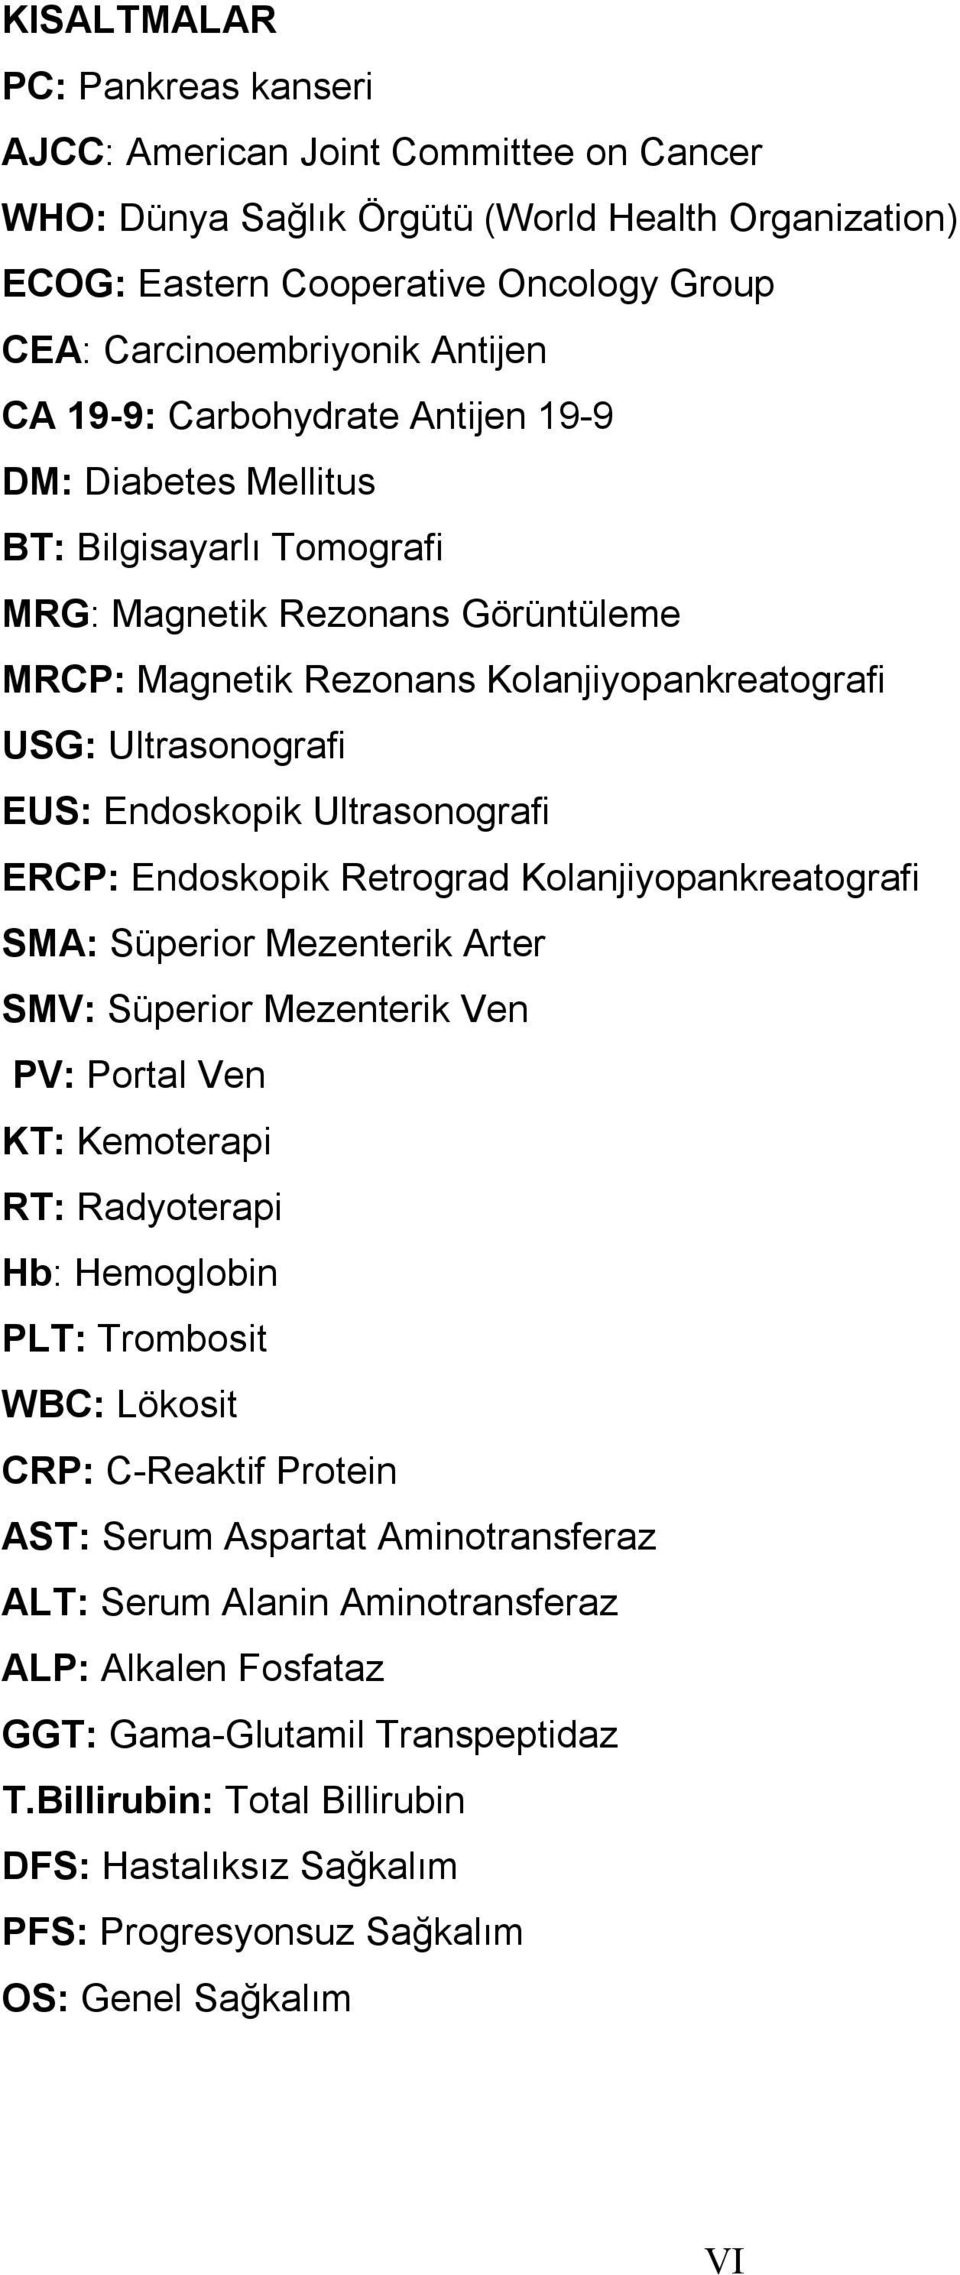 Endoskopik Ultrasonografi ERCP: Endoskopik Retrograd Kolanjiyopankreatografi SMA: Süperior Mezenterik Arter SMV: Süperior Mezenterik Ven PV: Portal Ven KT: Kemoterapi RT: Radyoterapi Hb: Hemoglobin